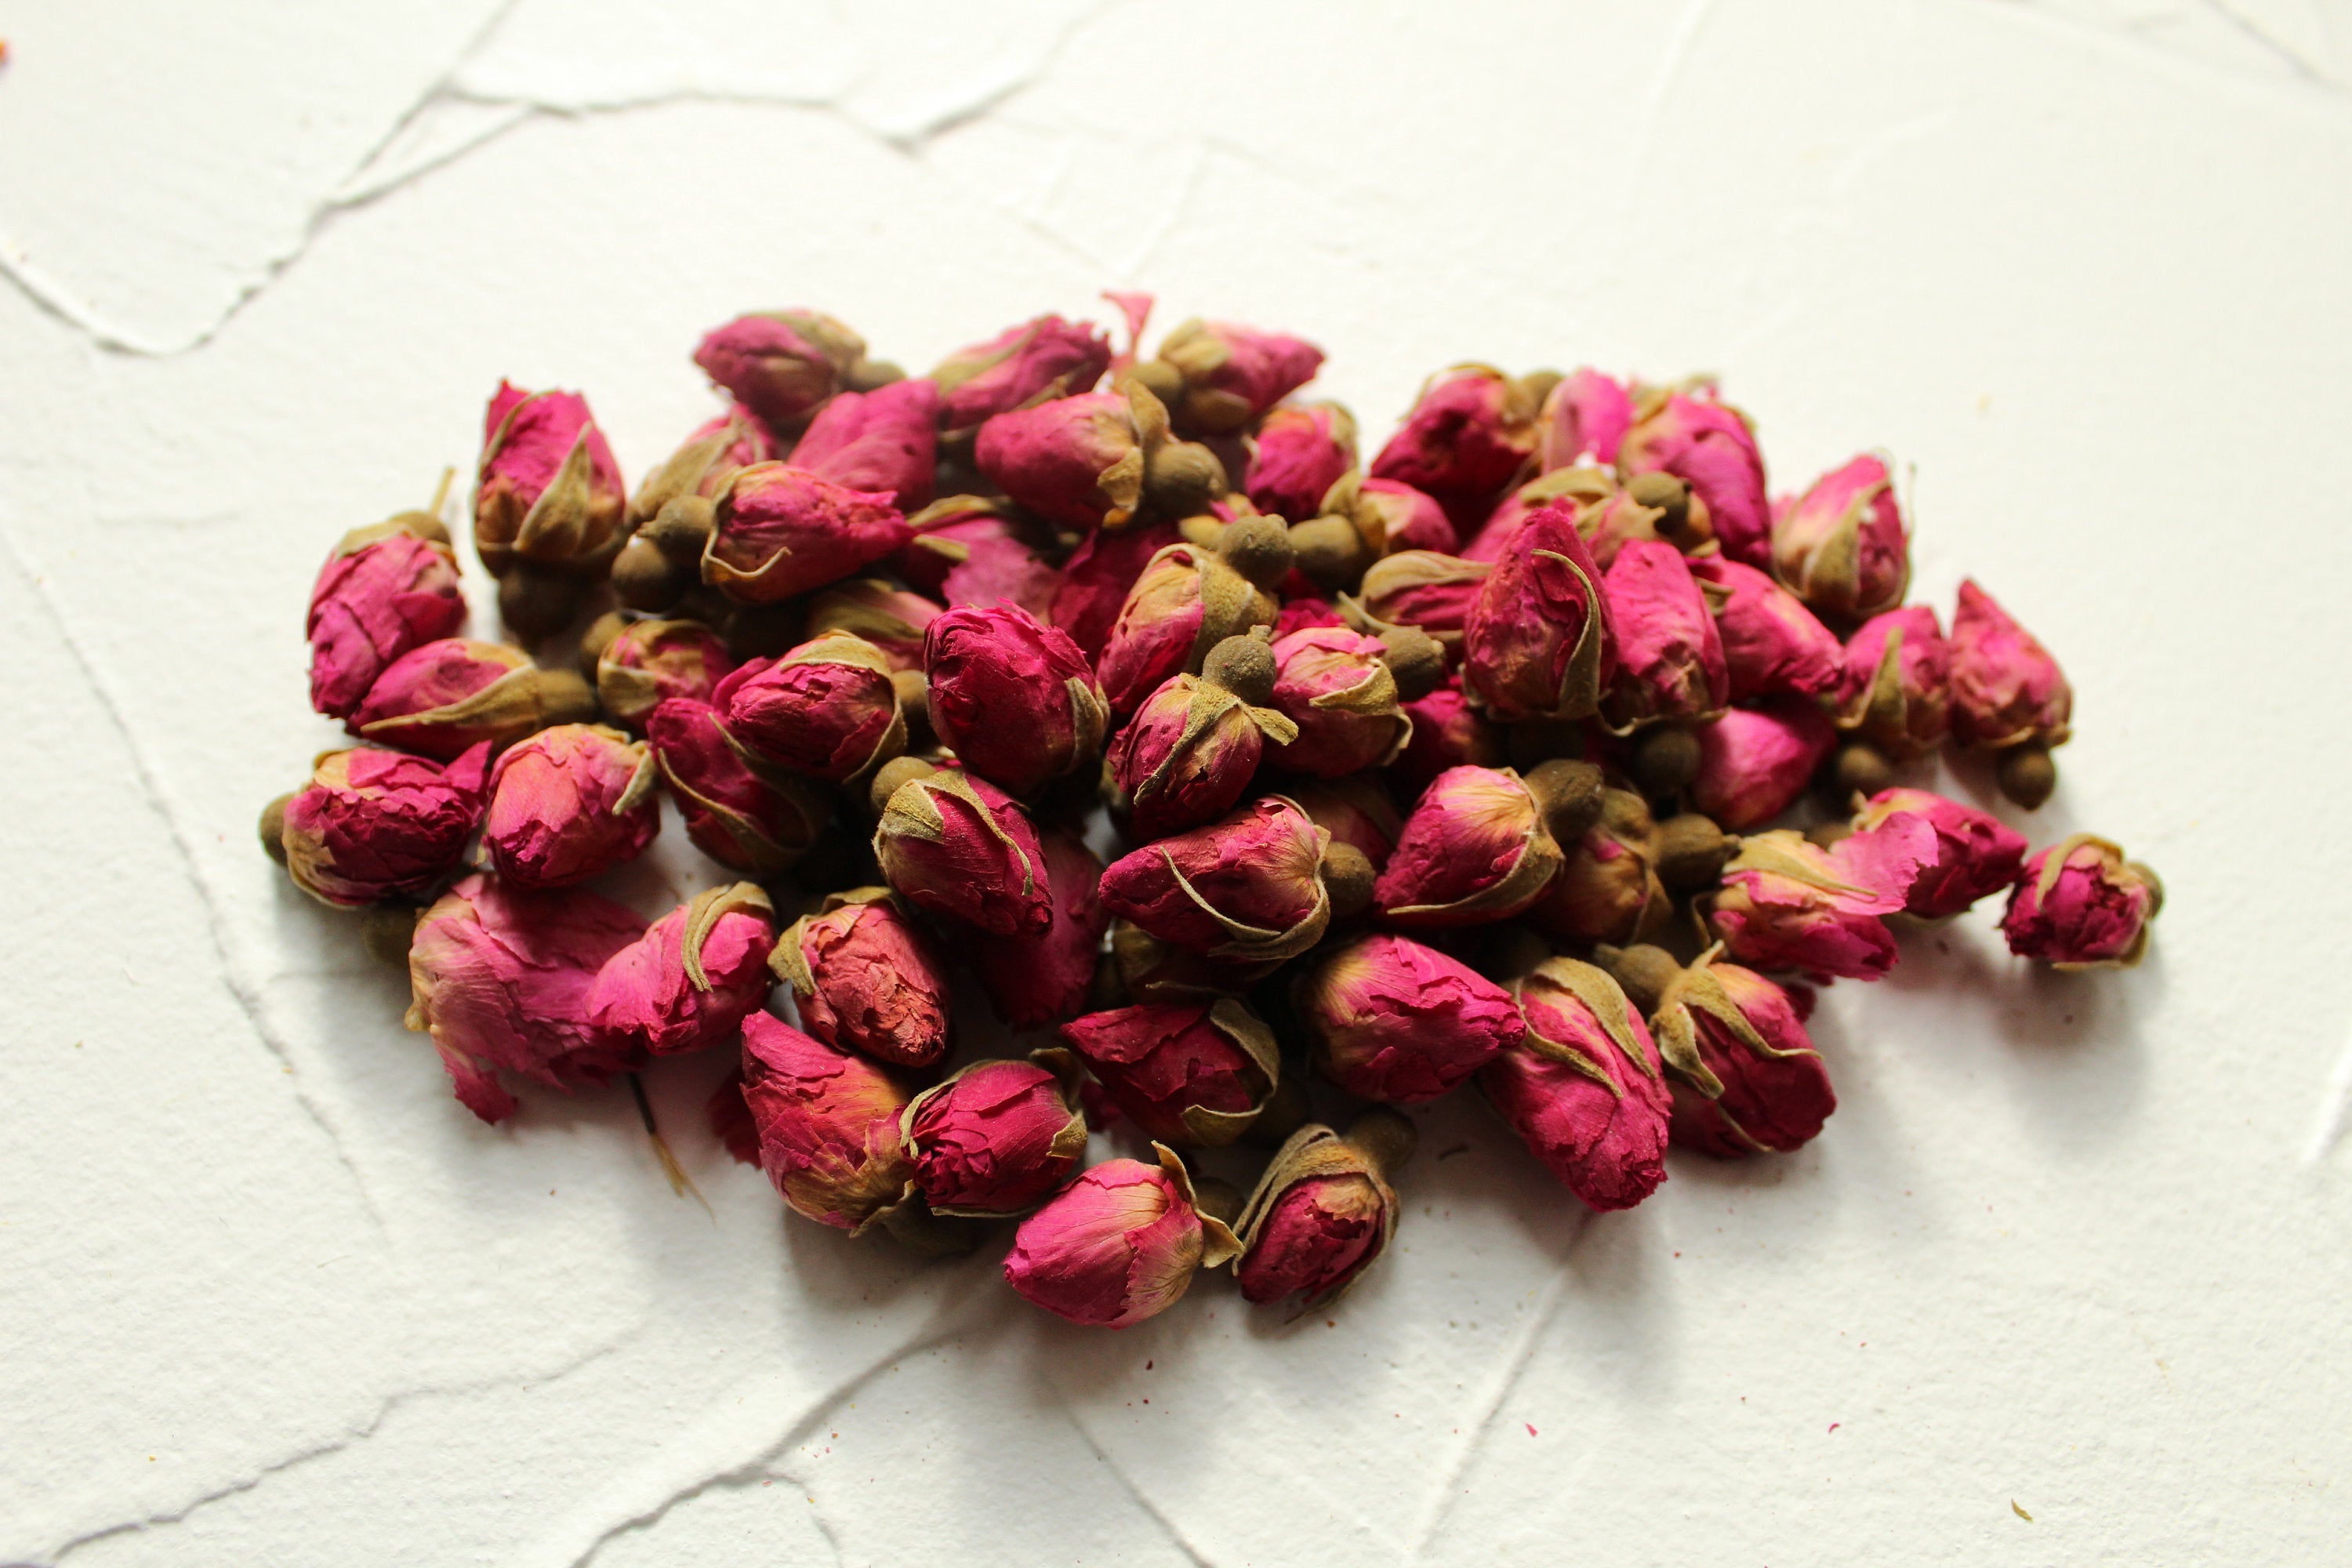 Red Rose Buds and Petals Organic Fair Trade - Boardwalk Beans